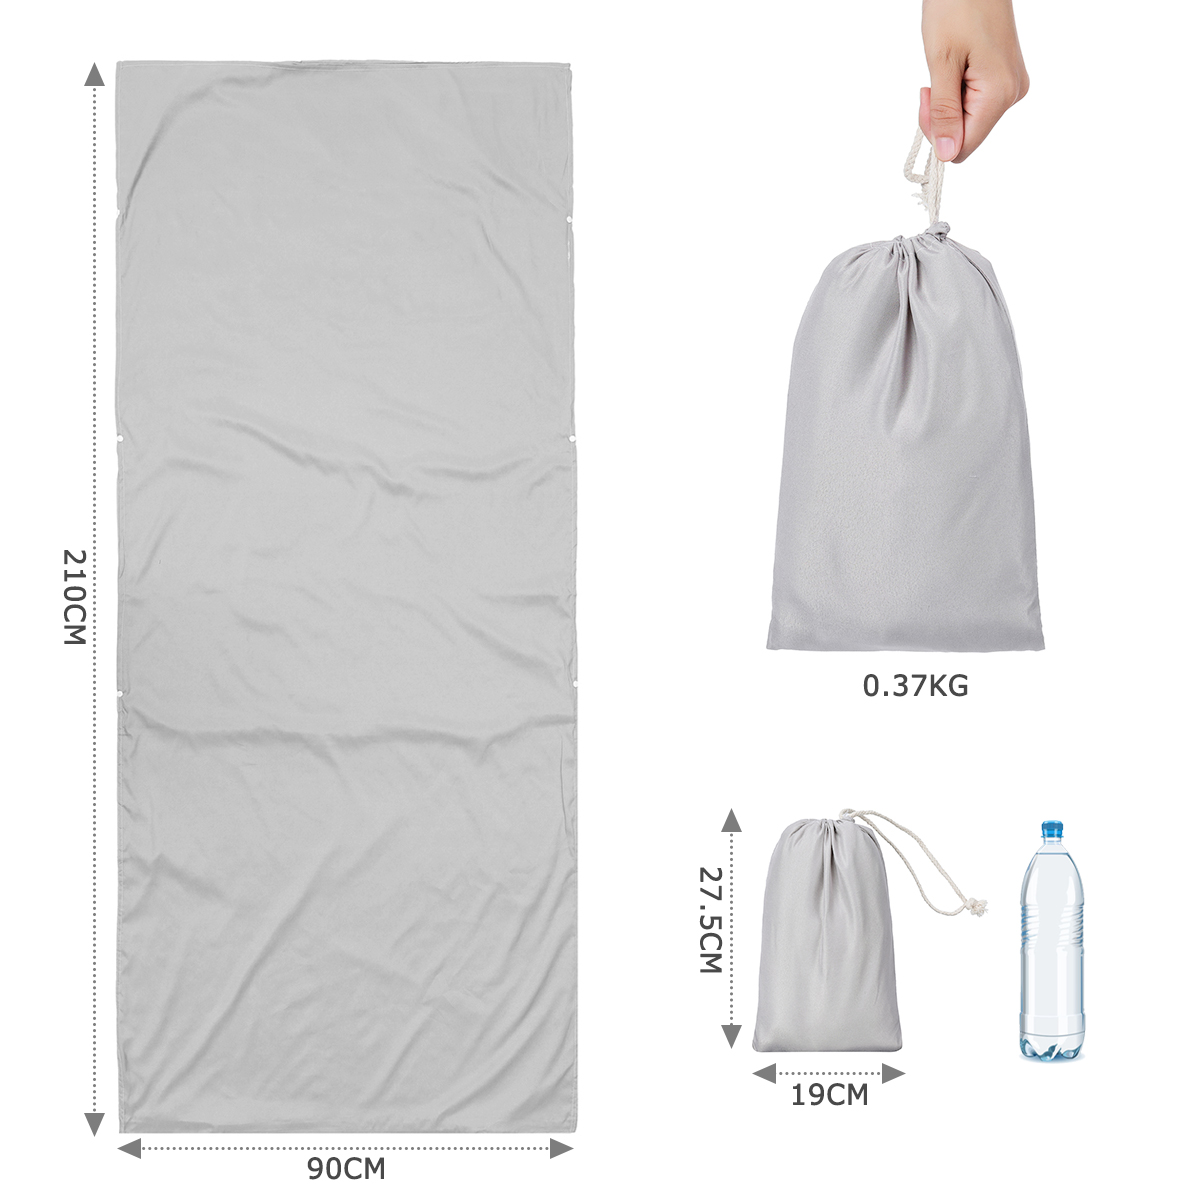 Portable-Sleeping-Bag-Cover-Ultralight-Sleep-Sheet-Outdoor-Camping-Hiking-Travel-Bag-1883995-9